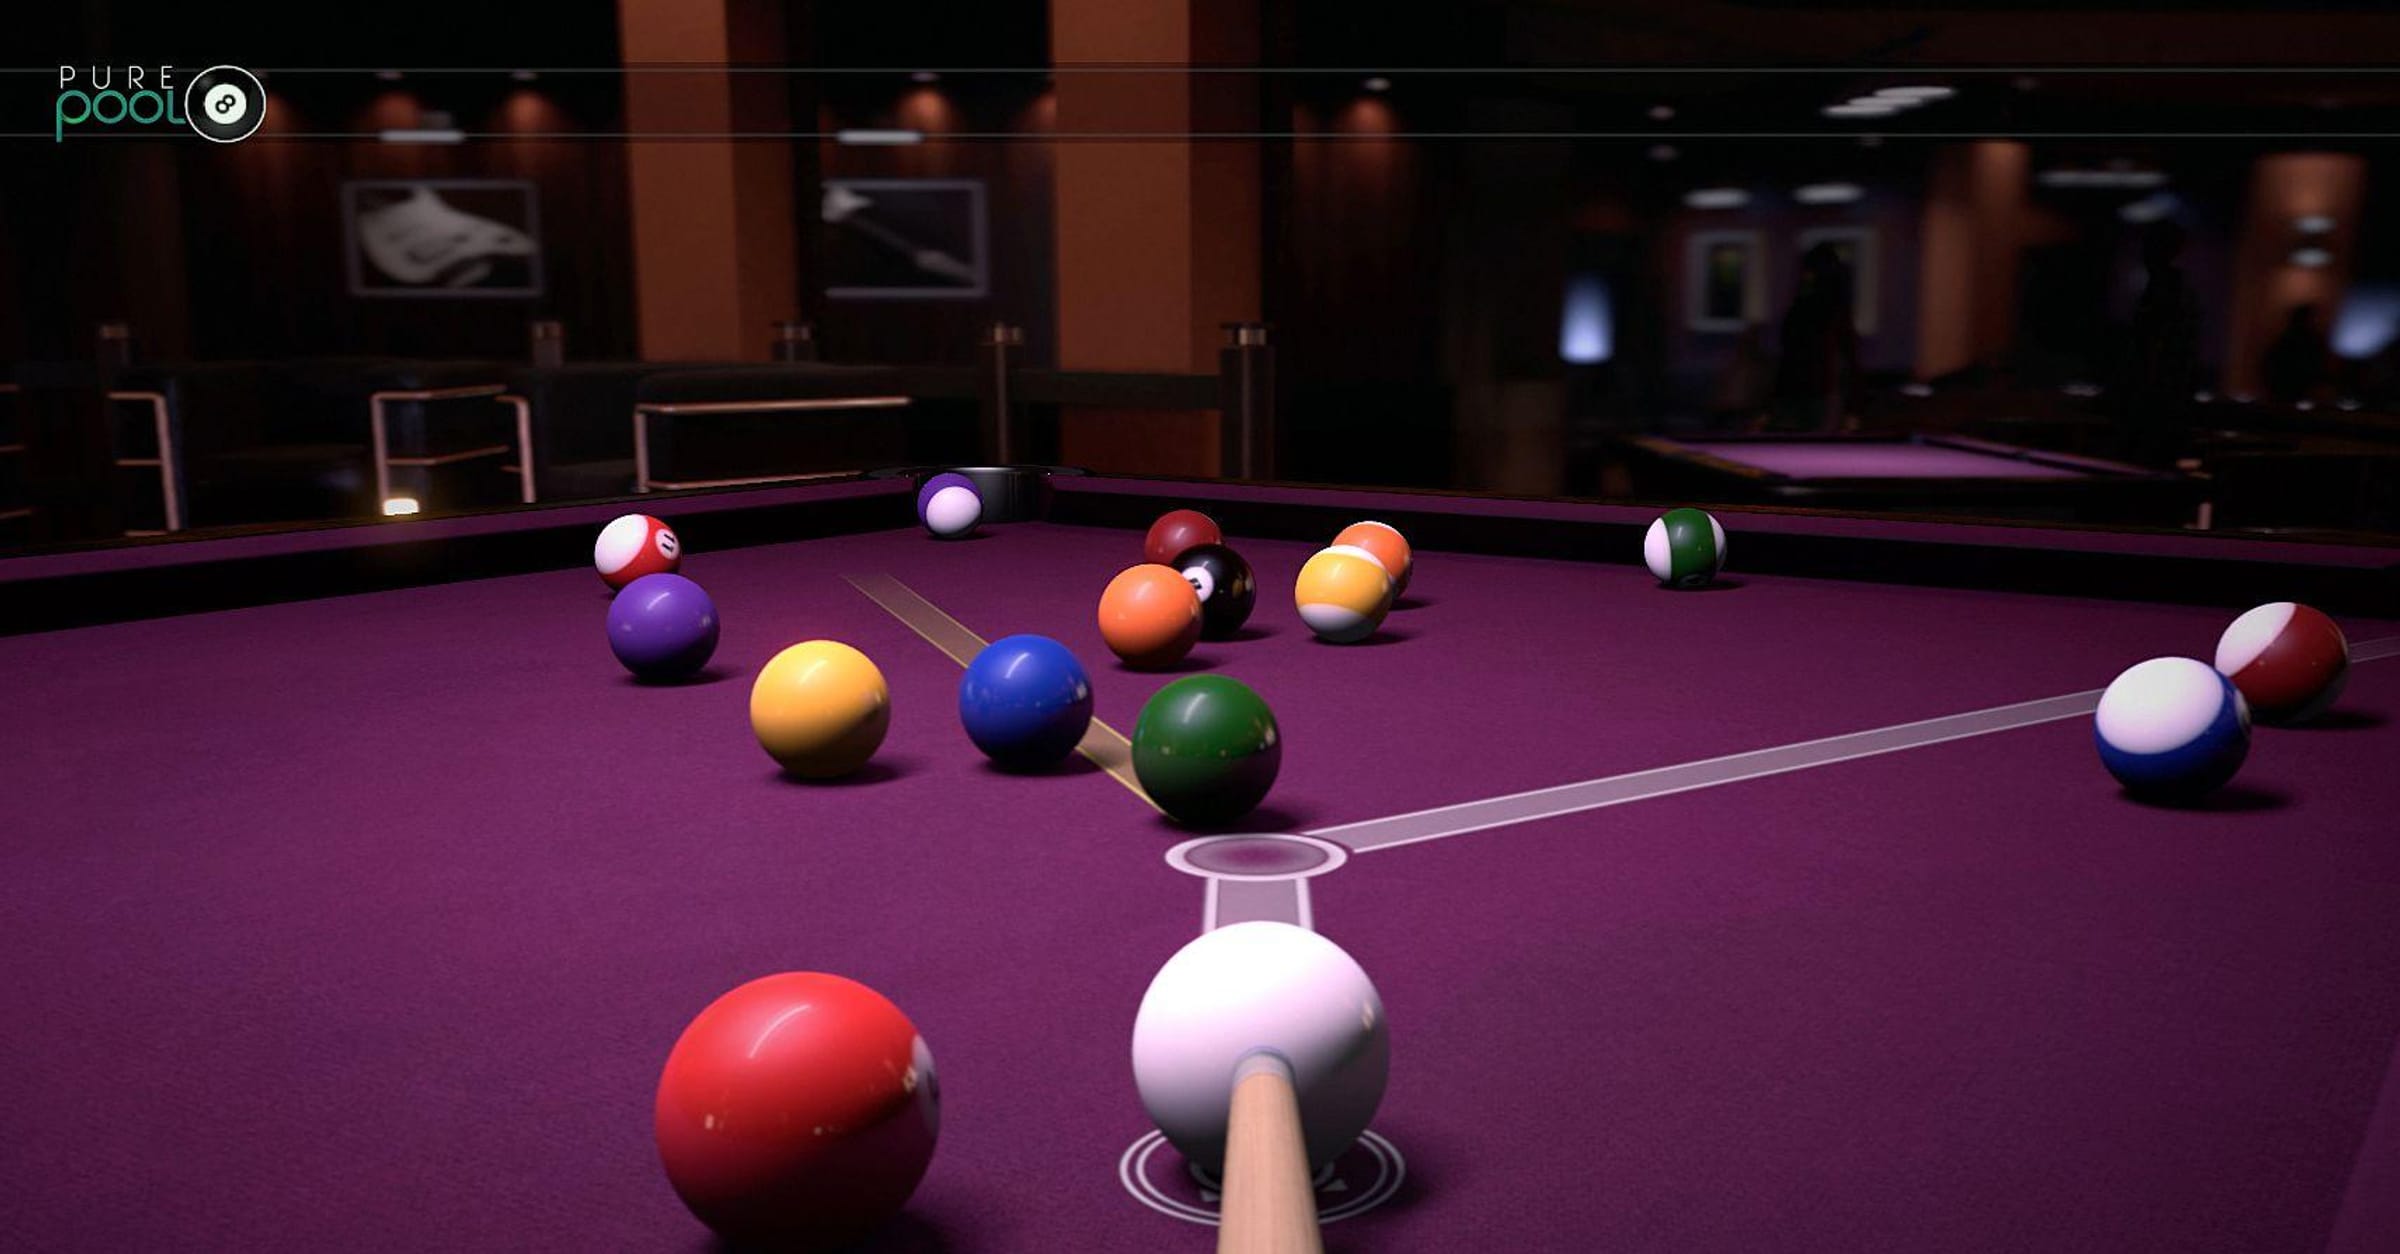 Cue Club 2: Pool & Snooker no Steam